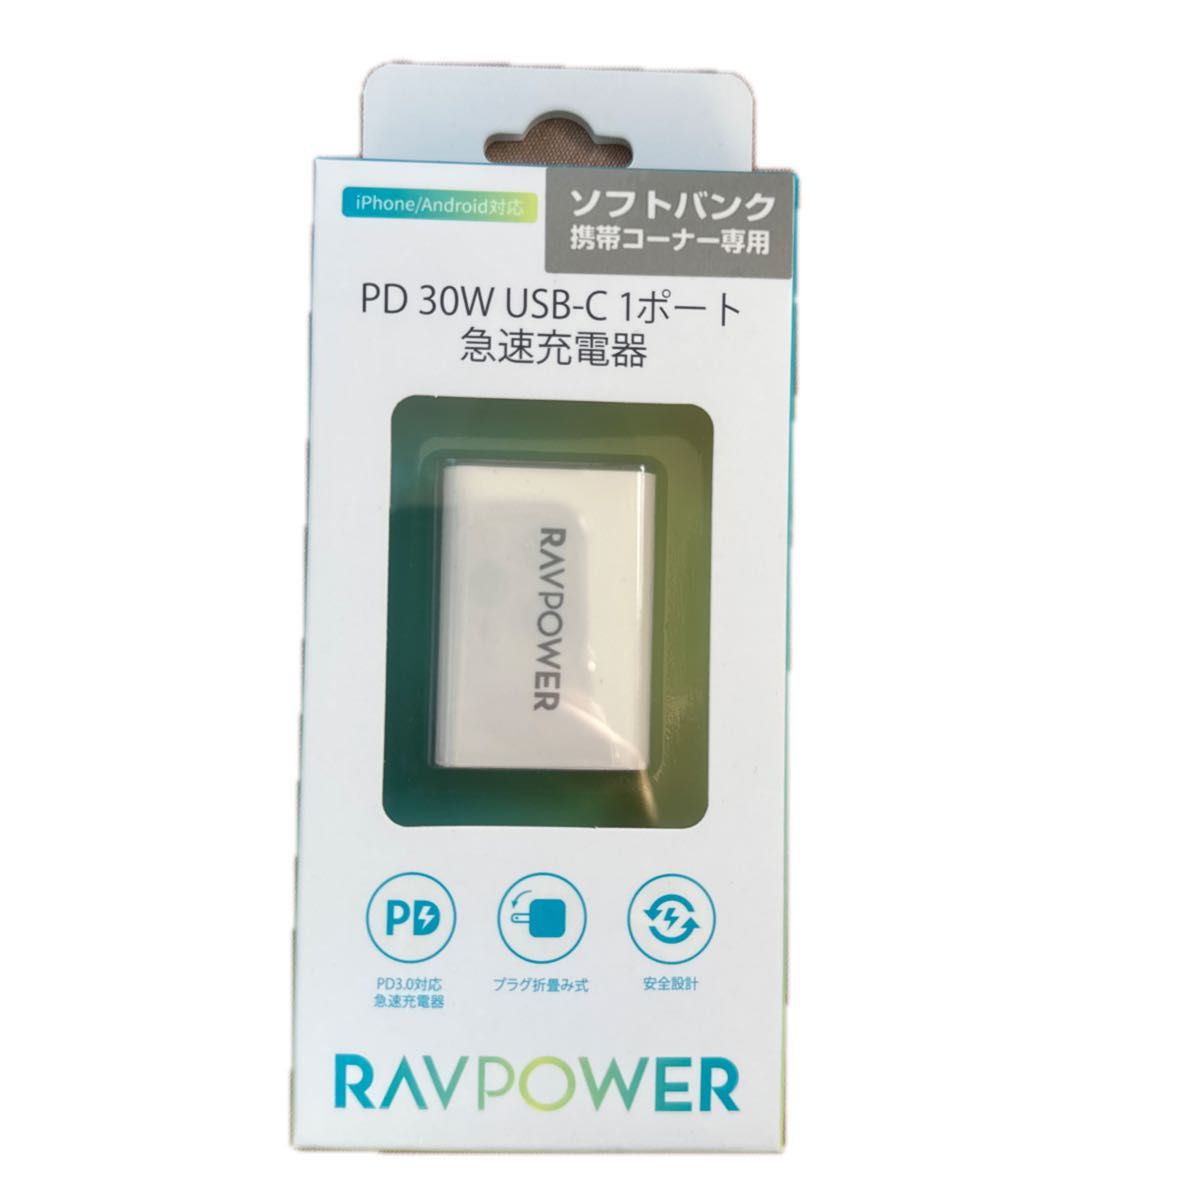 PD 30W USB-C 1ポート急速充電器【新品未開封】 Type-C ホワイト 急速充電器 RAVPOWER